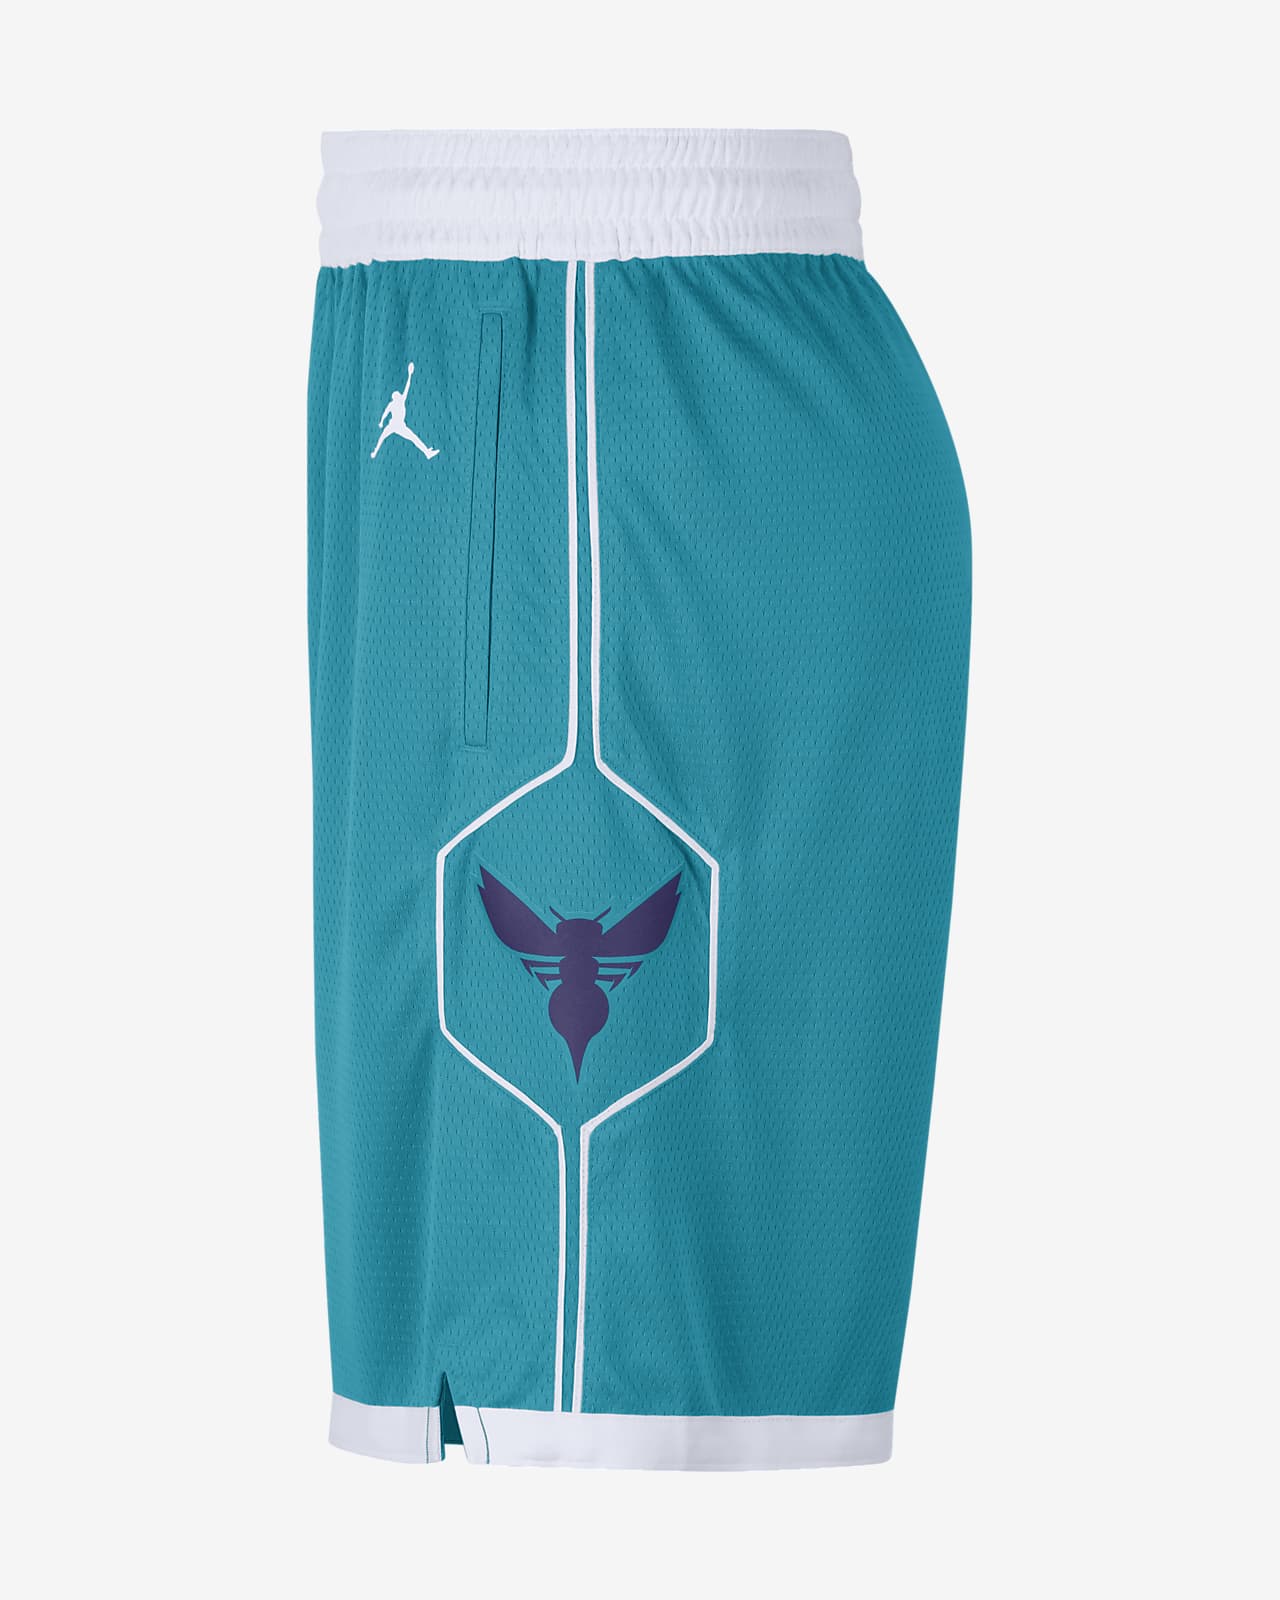 Men's NBA Jordan Shorts